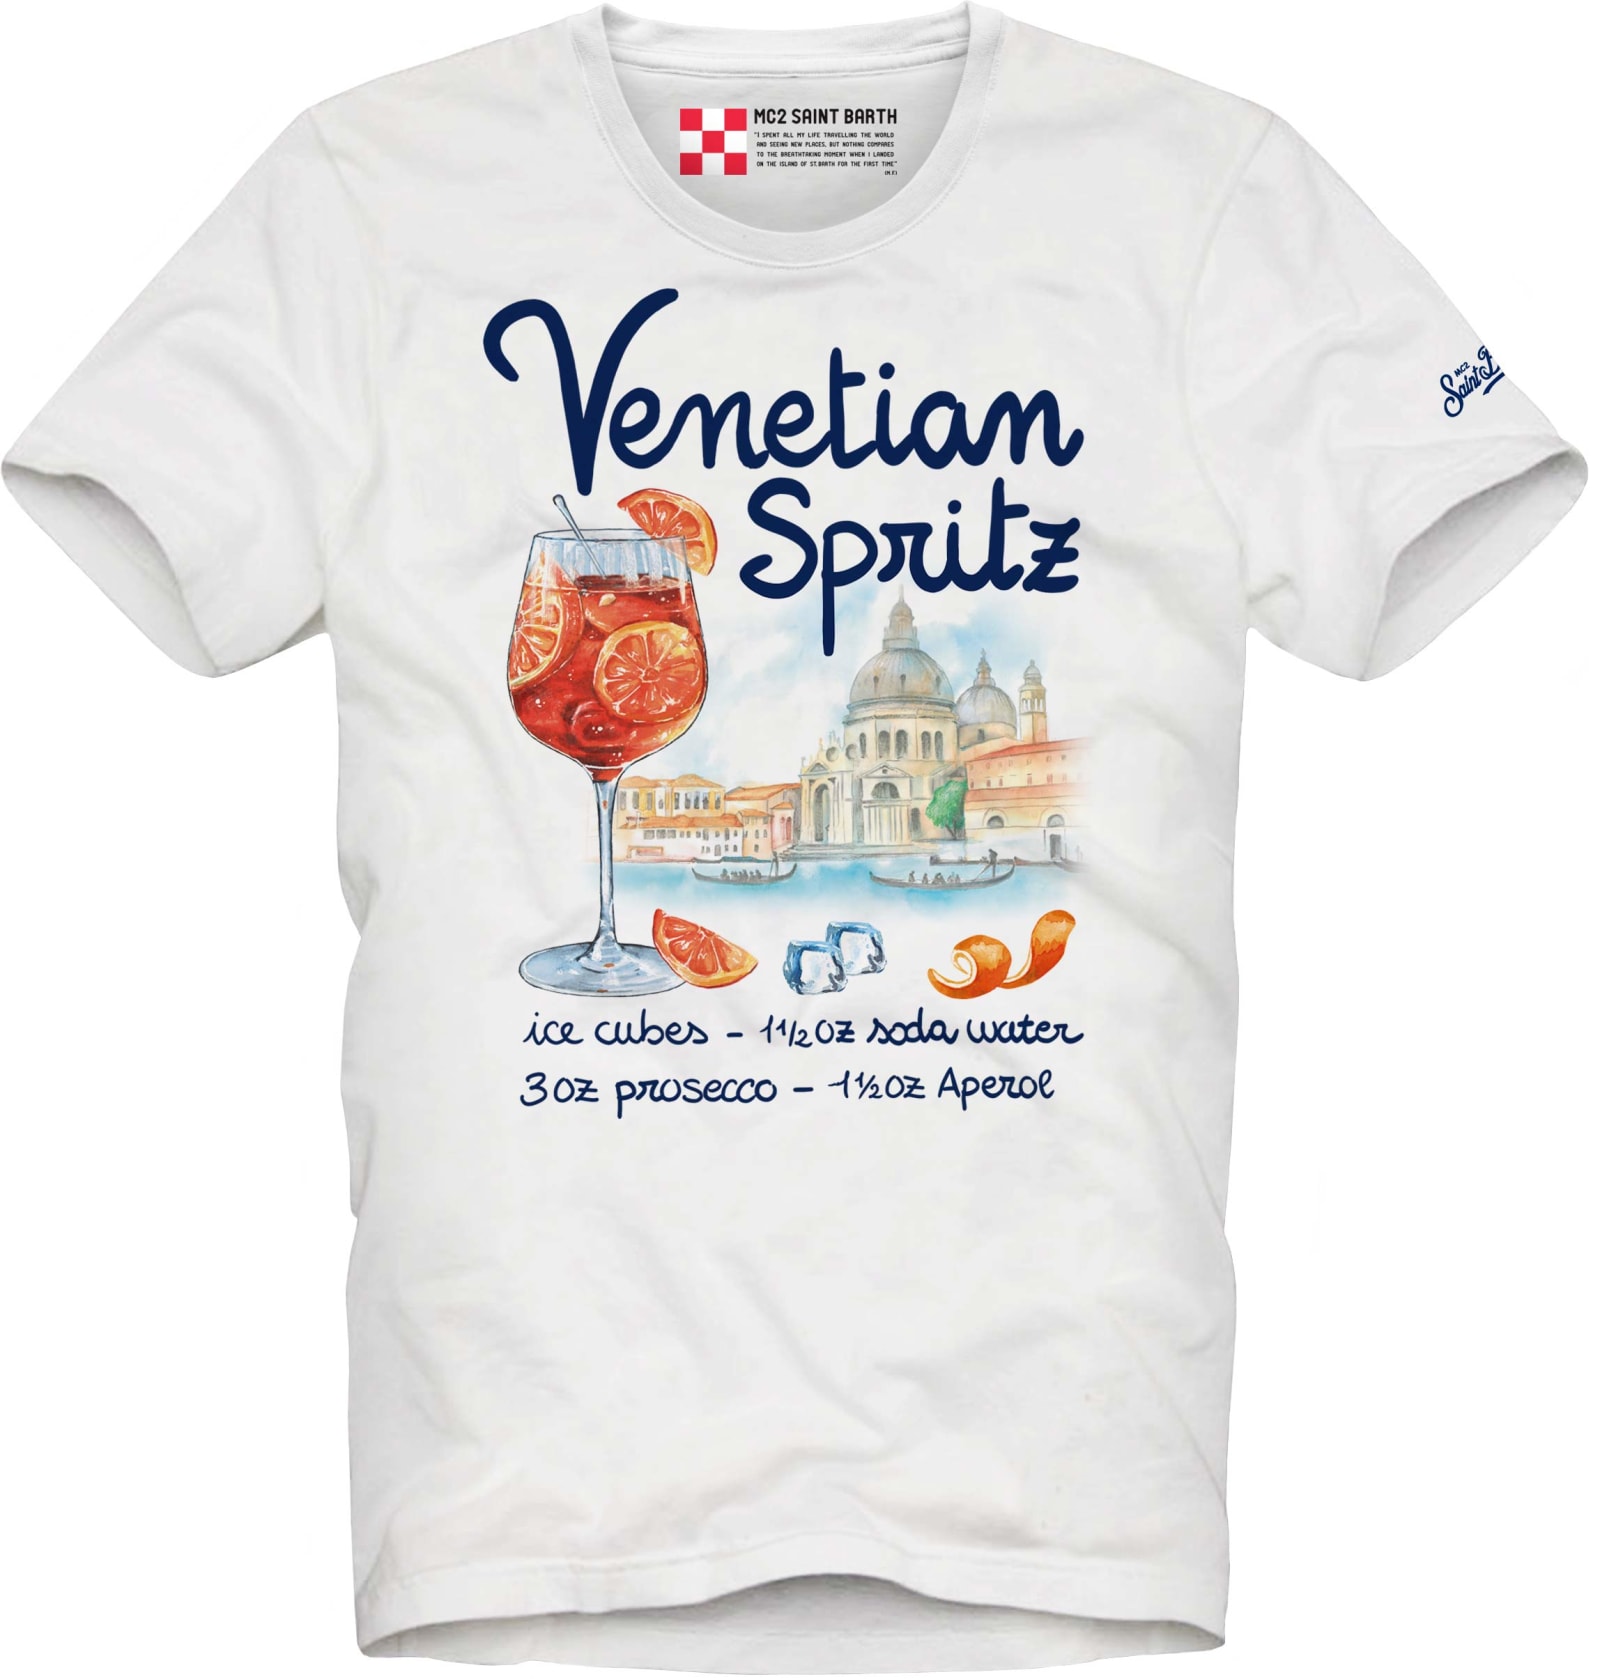 MC2 Saint Barth Venetian Spritz Printed Man T-shirt